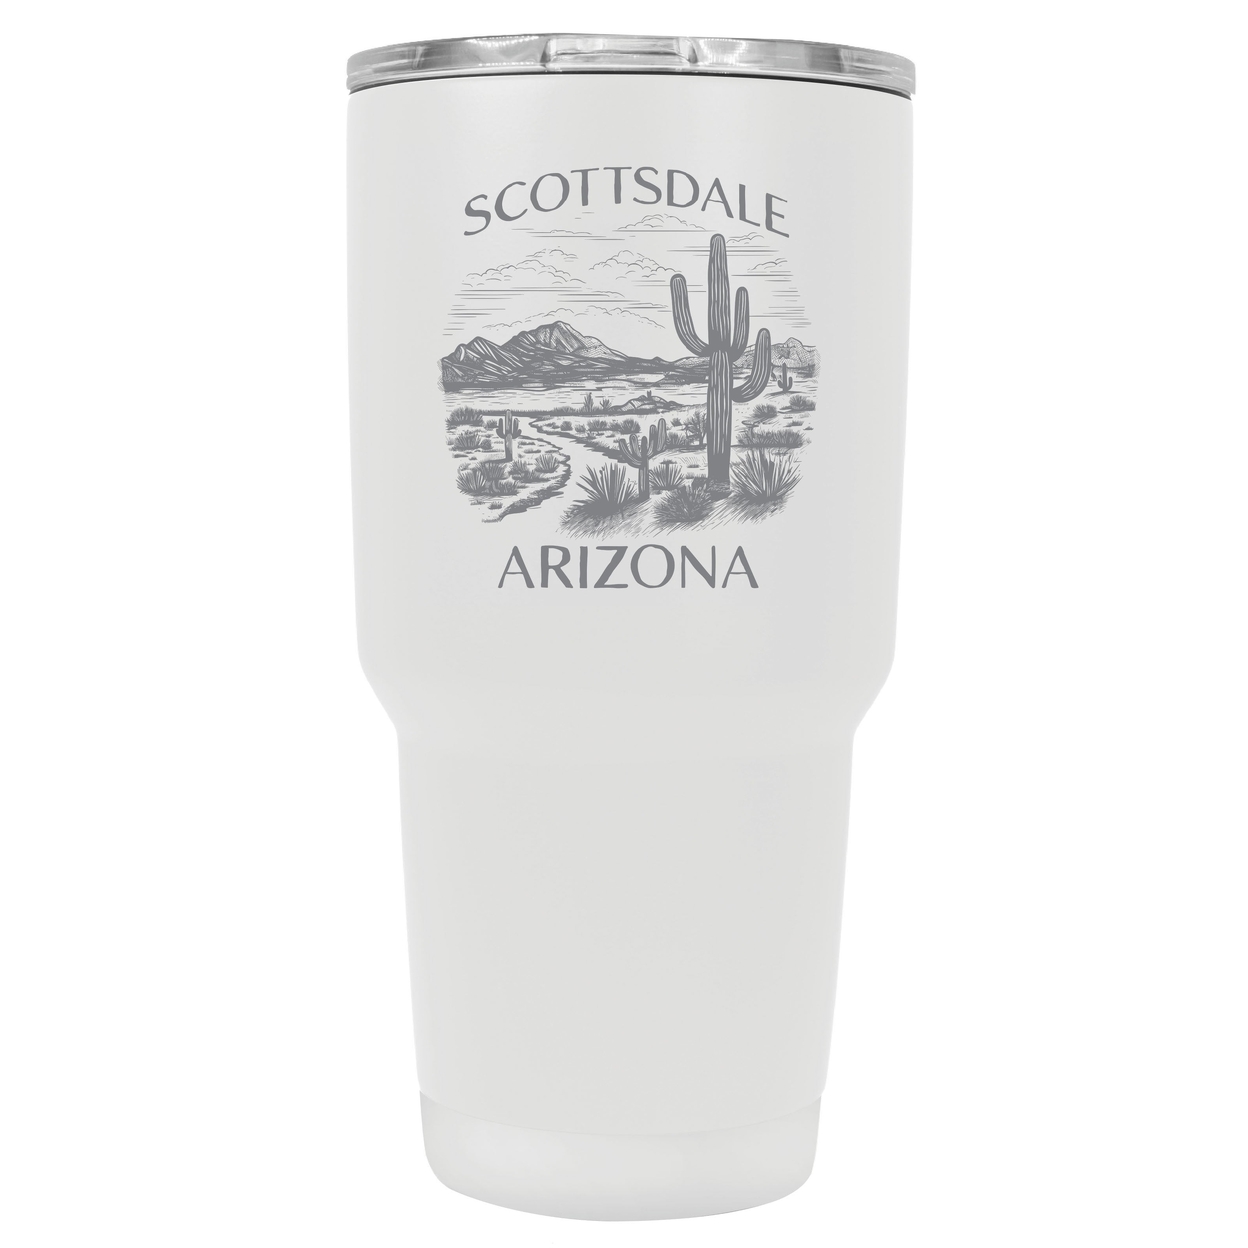 Scottsdale Arizona Souvenir 24 Oz Engraved Insulated Stainless Steel Tumbler - Coral,,Single Unit